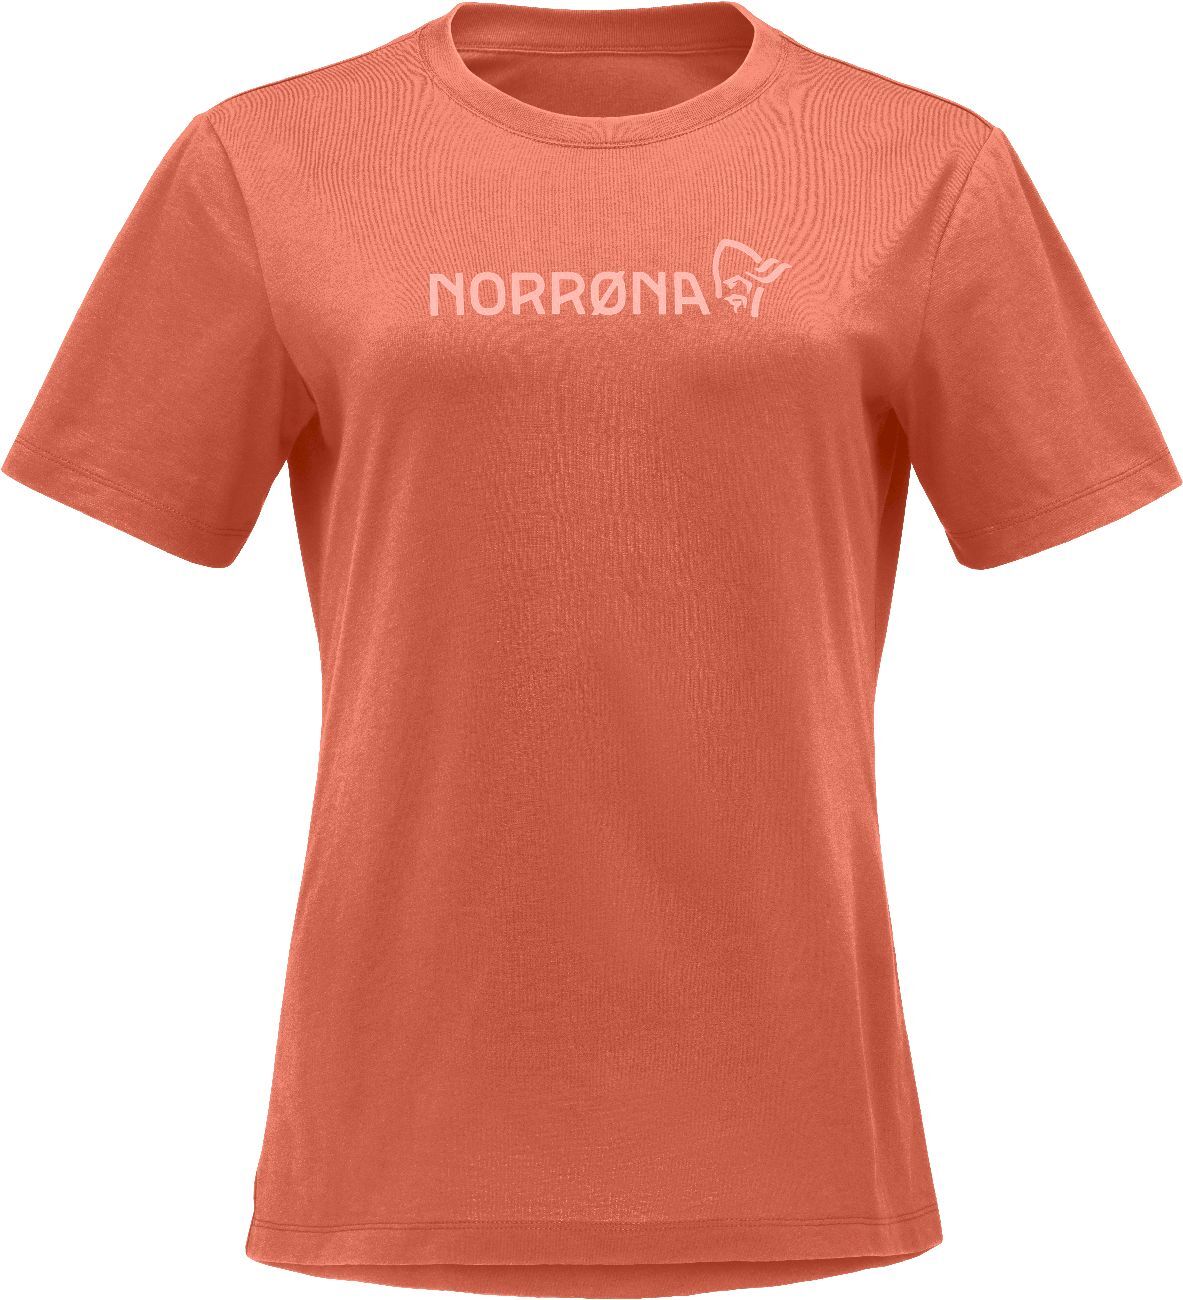 Norrona /29 Cotton Norrona Viking - T-shirt - Women's